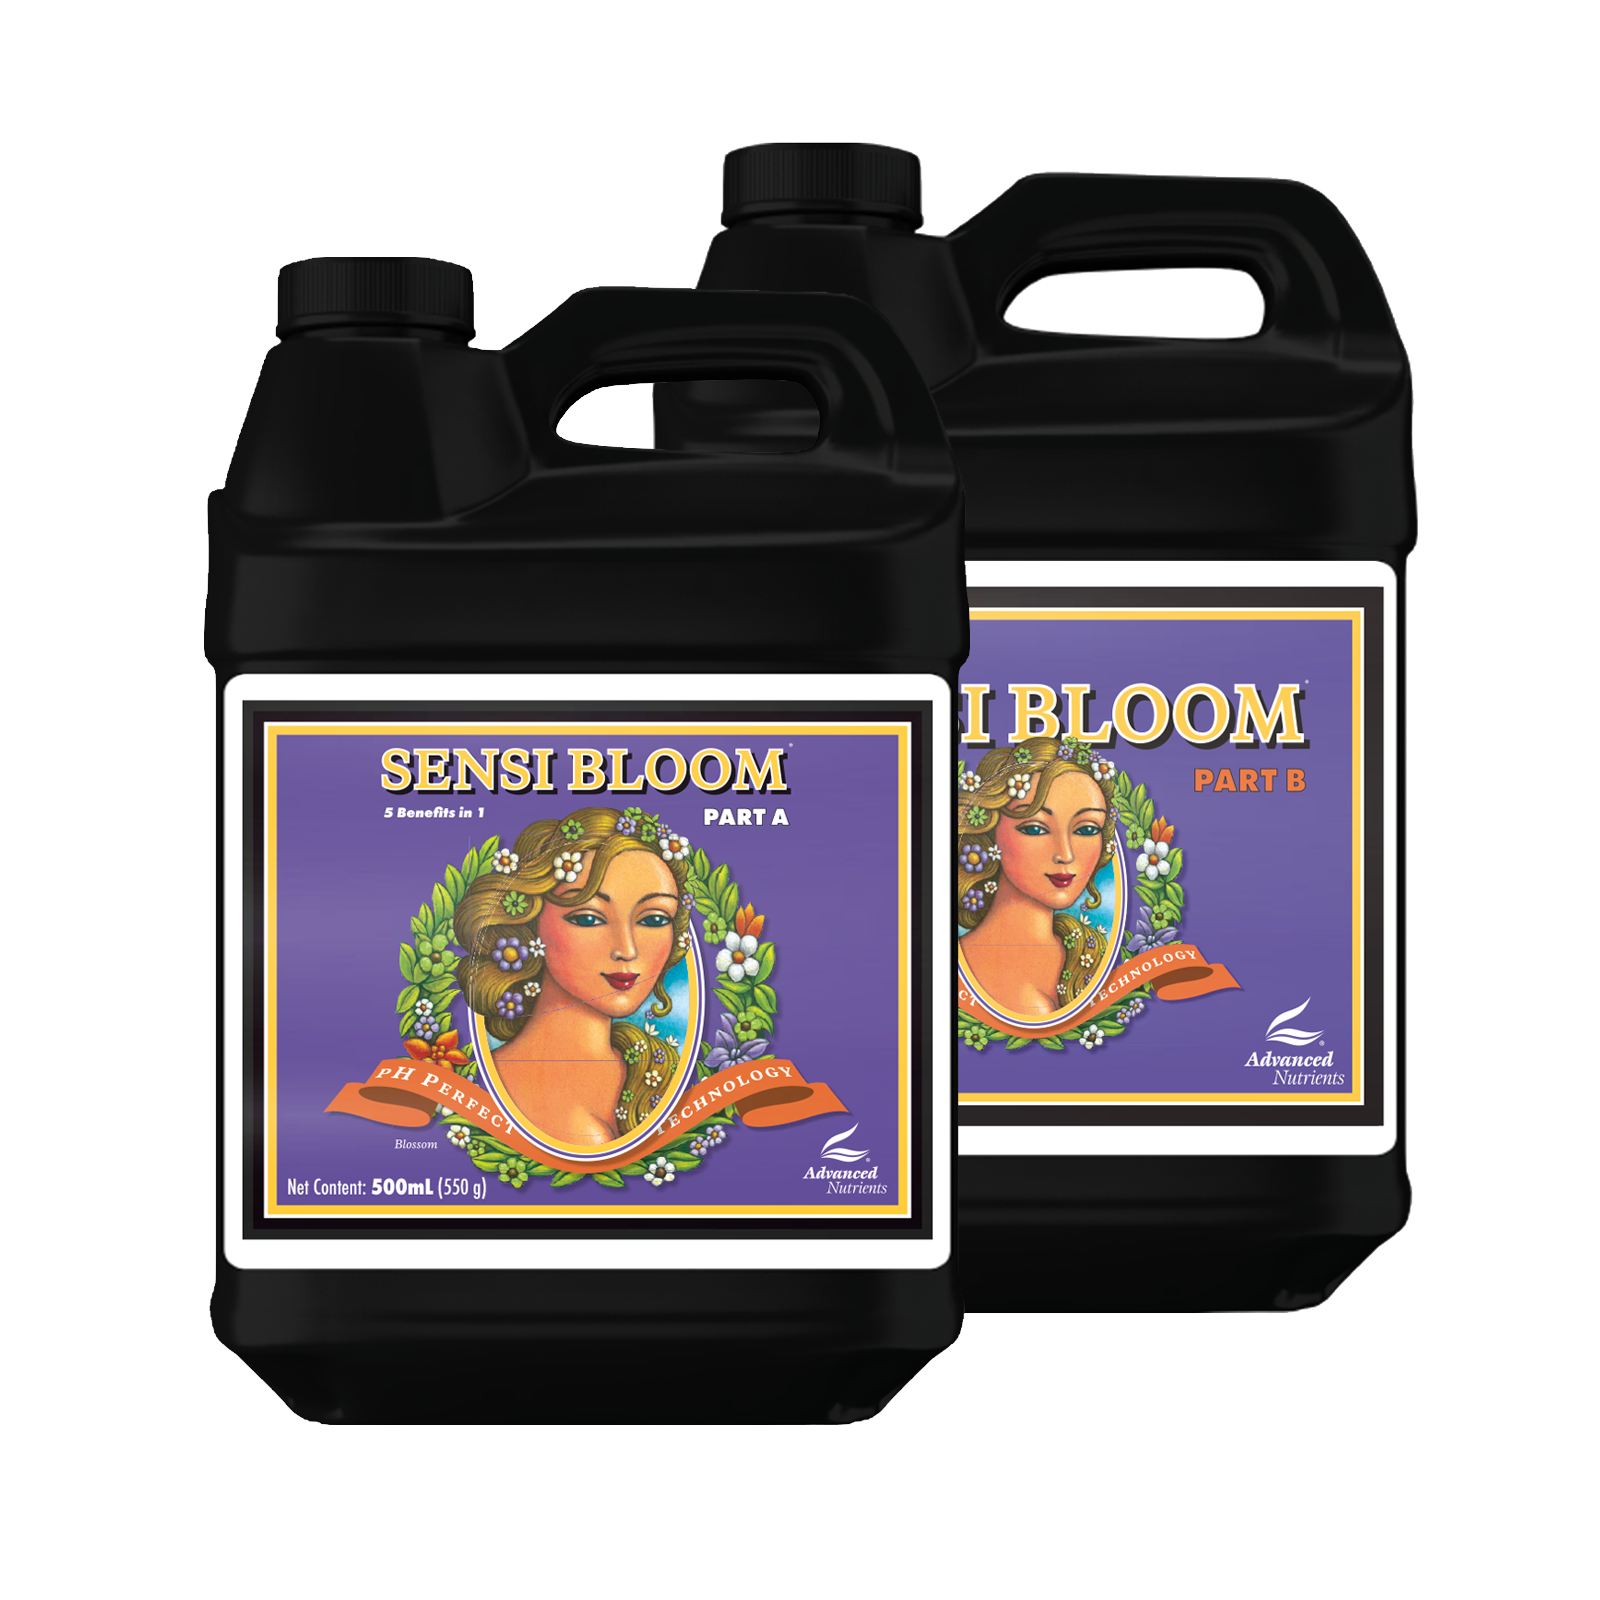 Nutrients 500ml Advanced Nutrients - Sensi Bloom AB